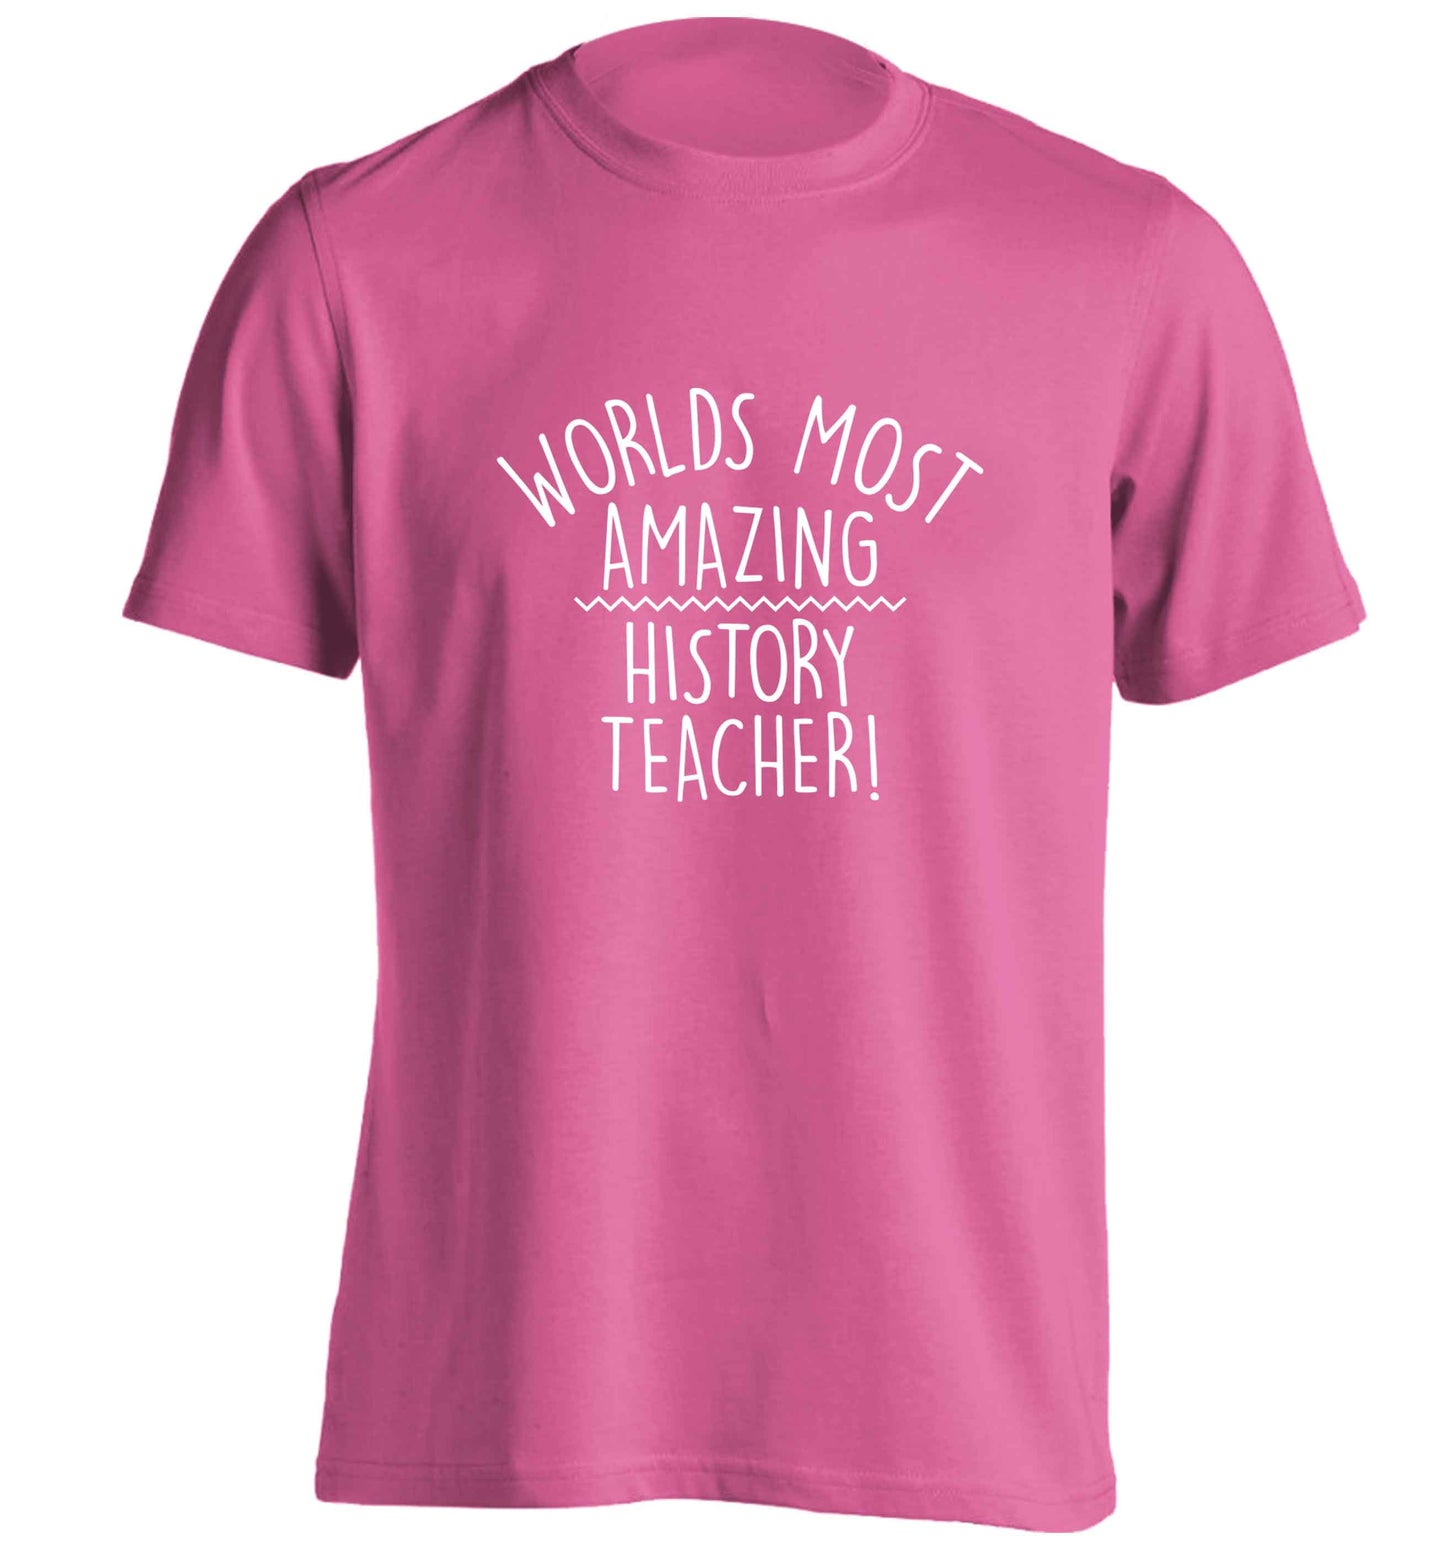 Worlds most amazing History teacher adults unisex pink Tshirt 2XL